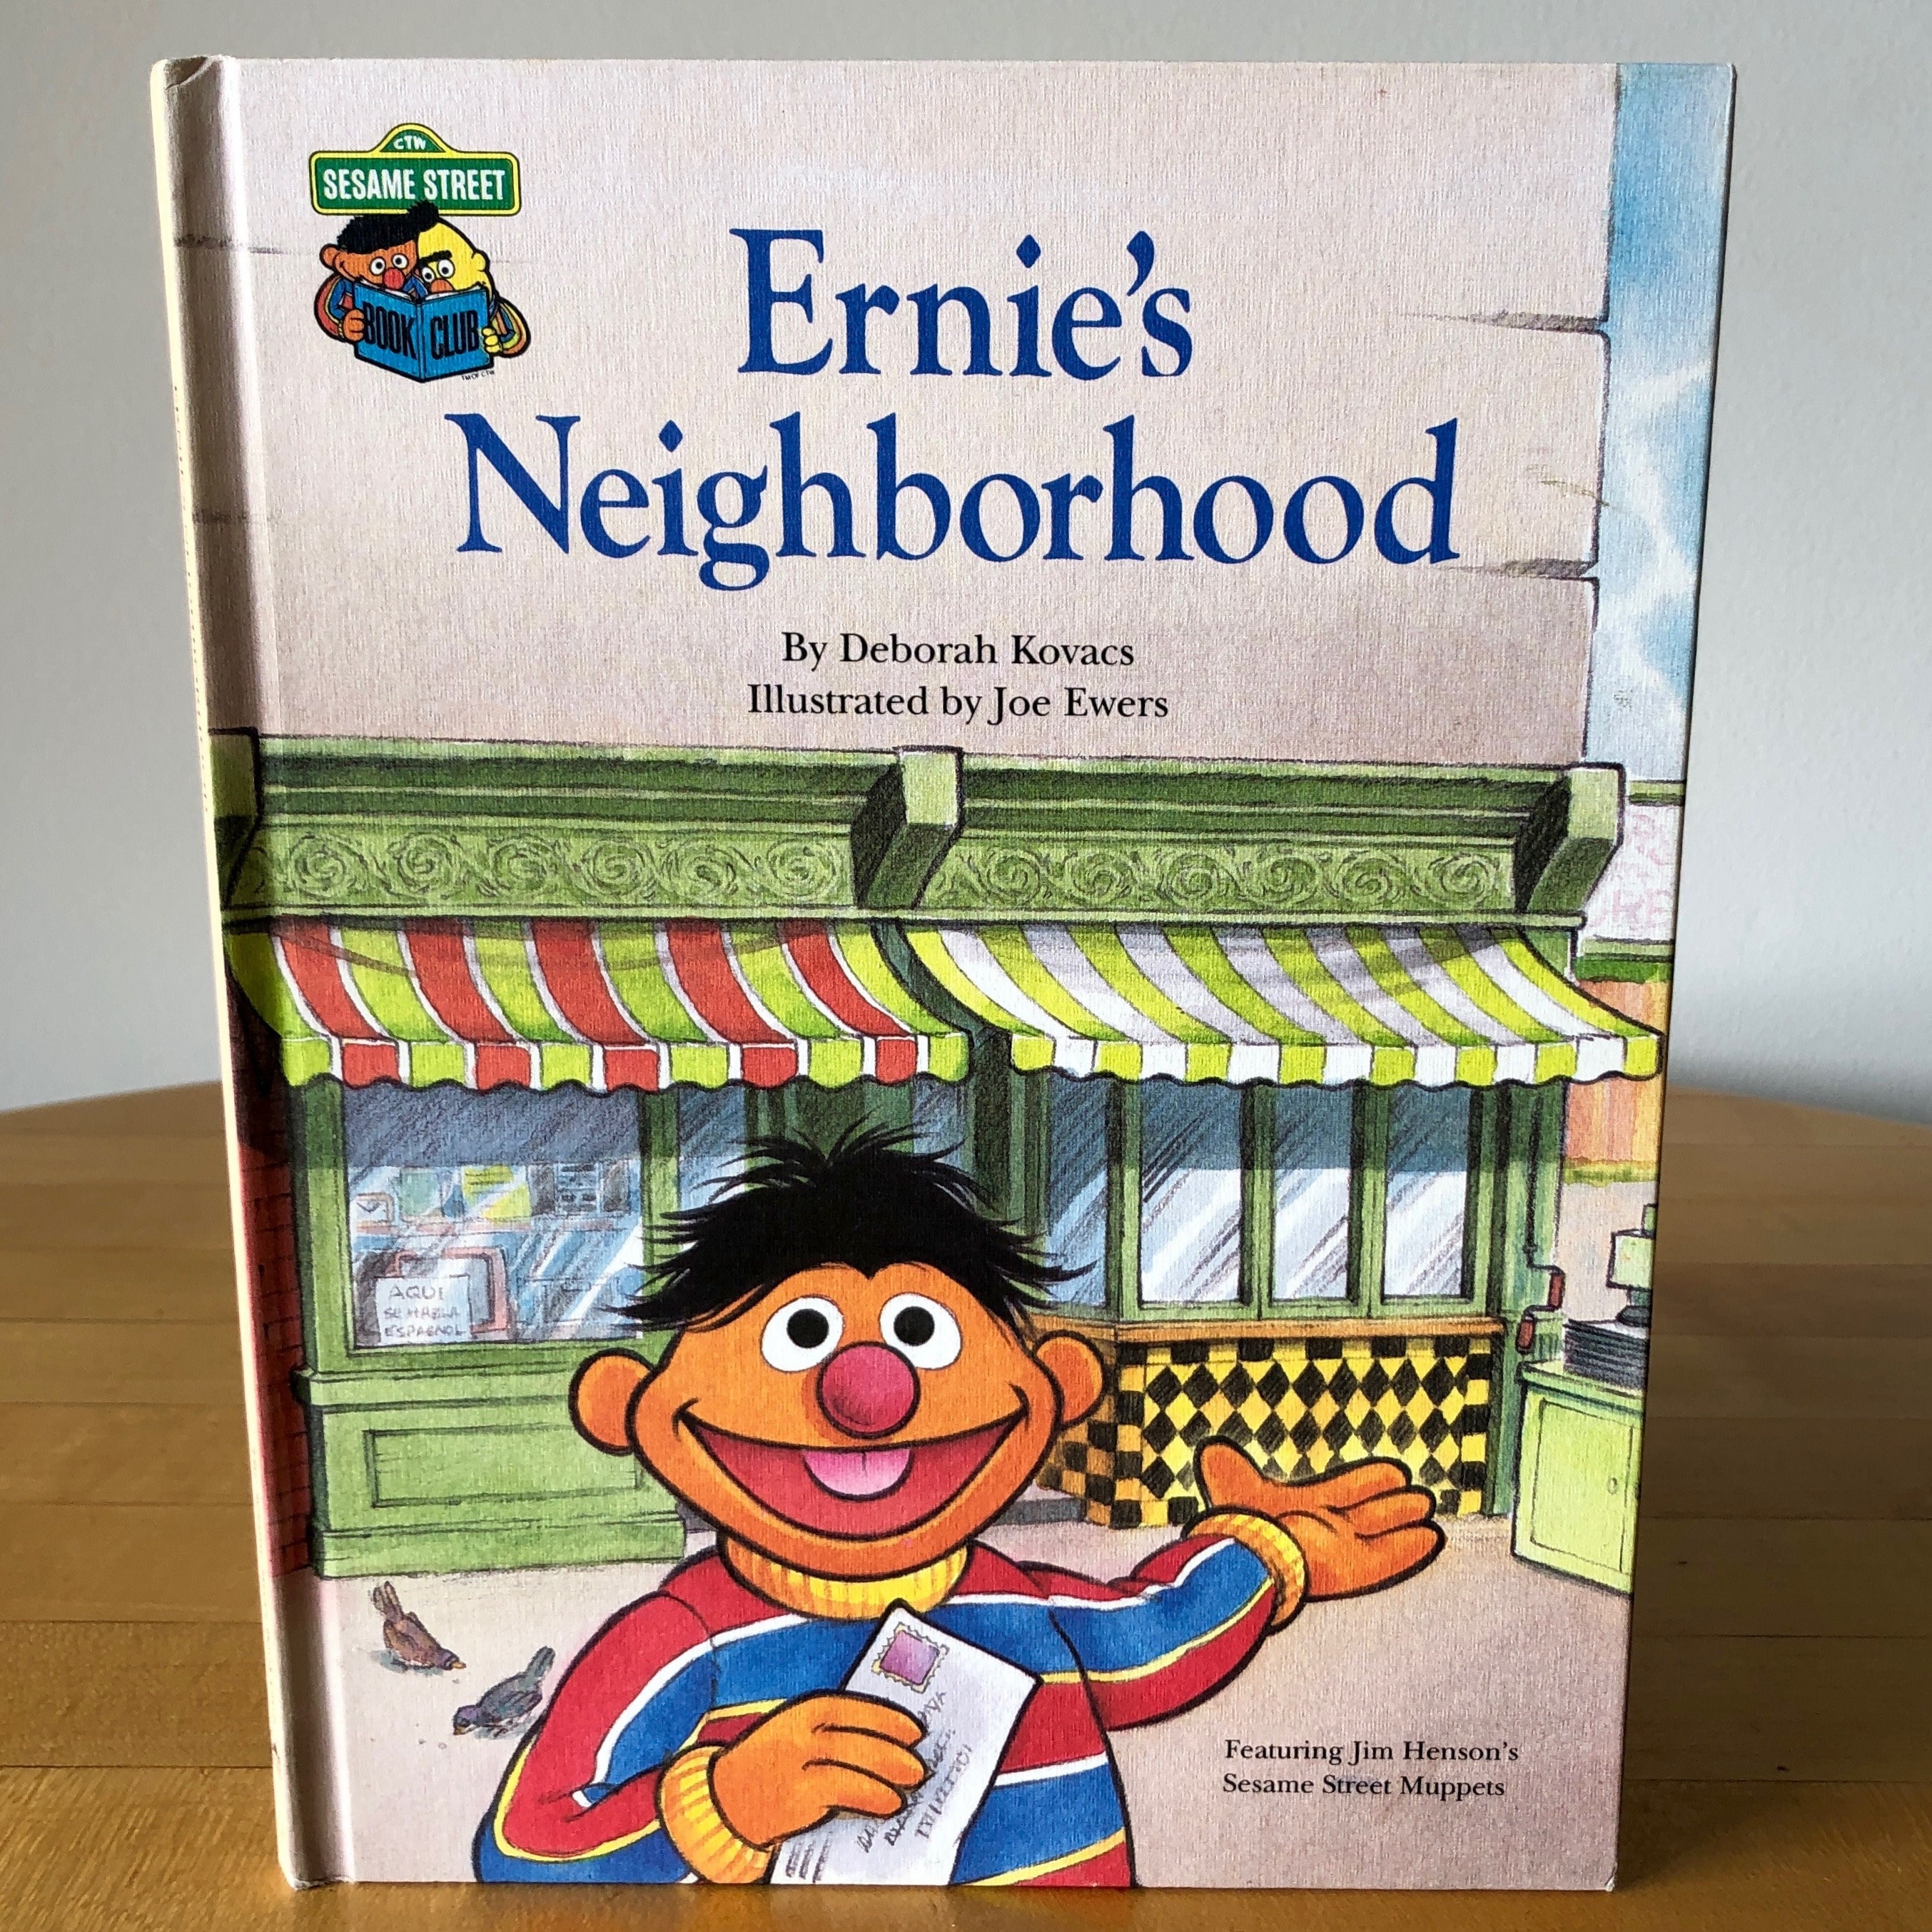 Vintage 1987 Golden Sesame Street Ernie's Book of Animals Big